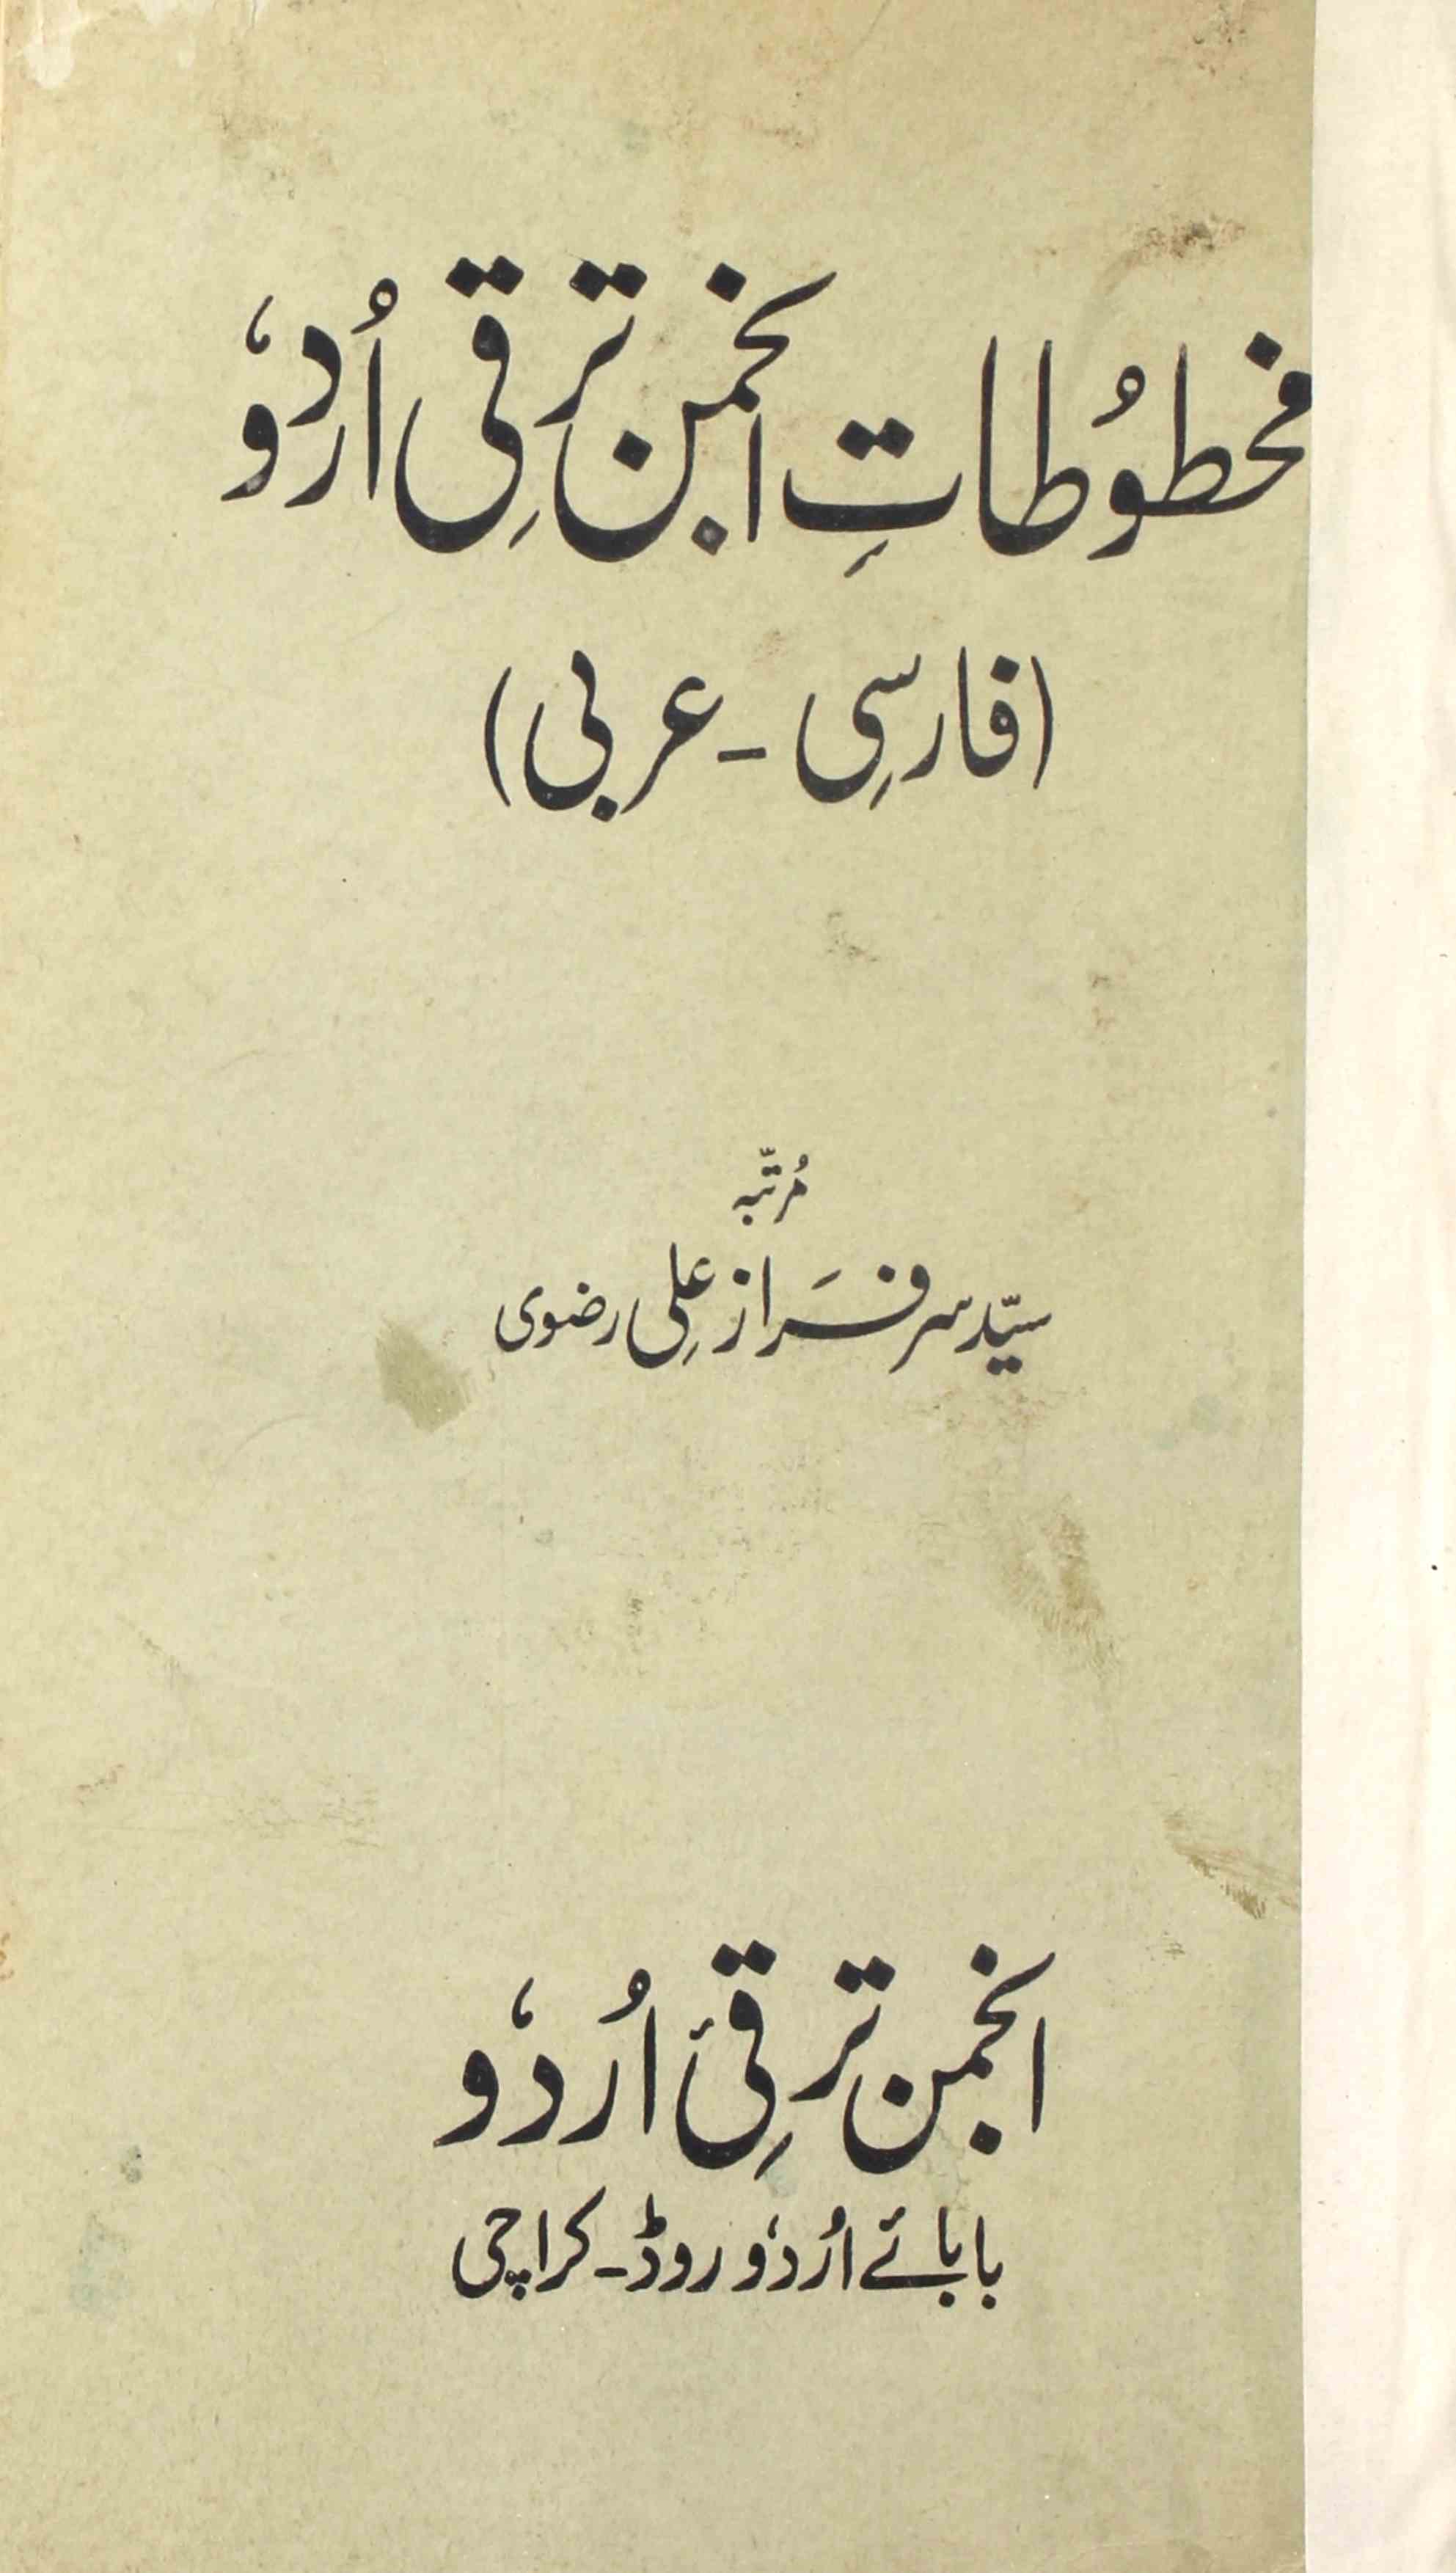 Makhtutat-e-Anjuman Taraqqi Urdu